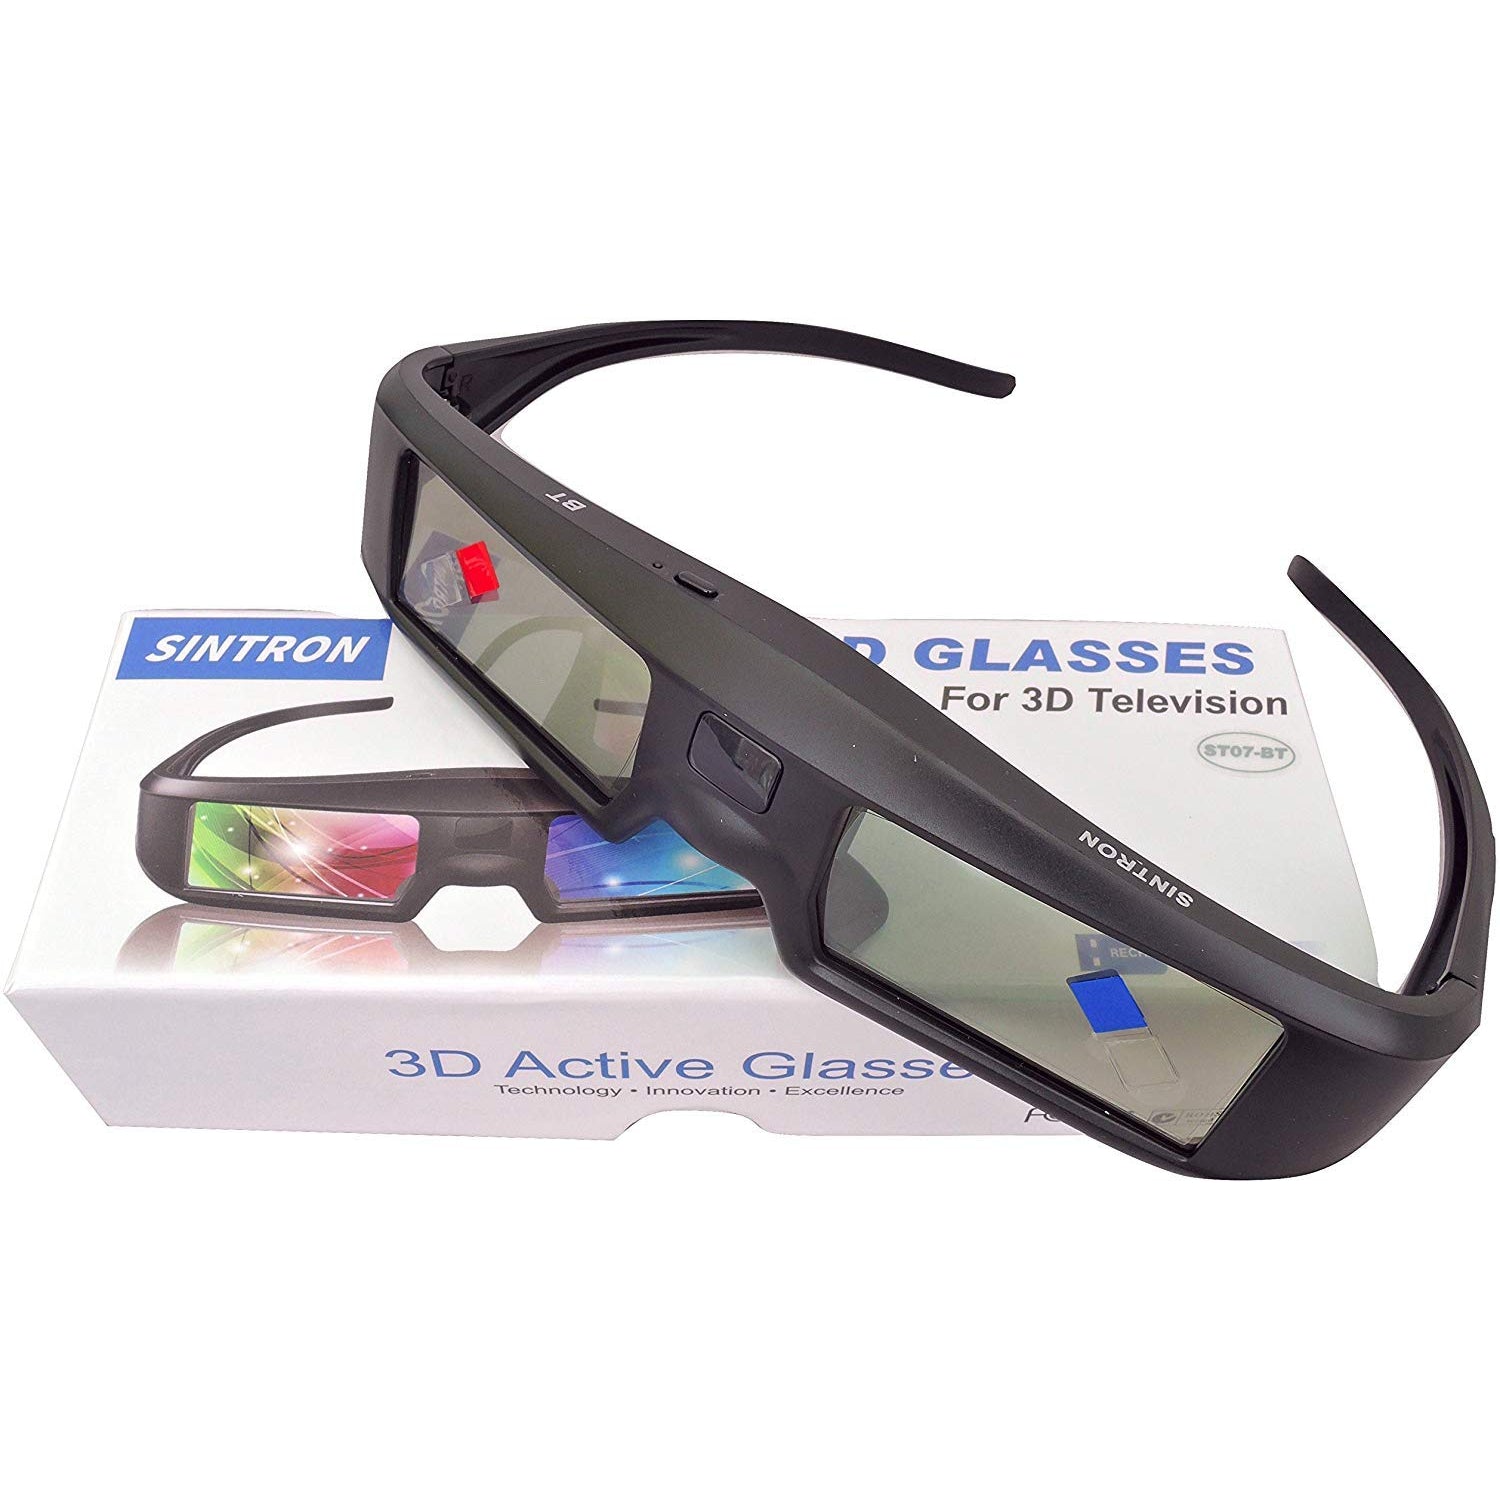 Sintron 3D Active Shutter Glasses Rechargeable ST07-BT For RF/Bluetooth Sony, Panasonic, Samsung 3D TV & Epson 3D projector (1 Pair)